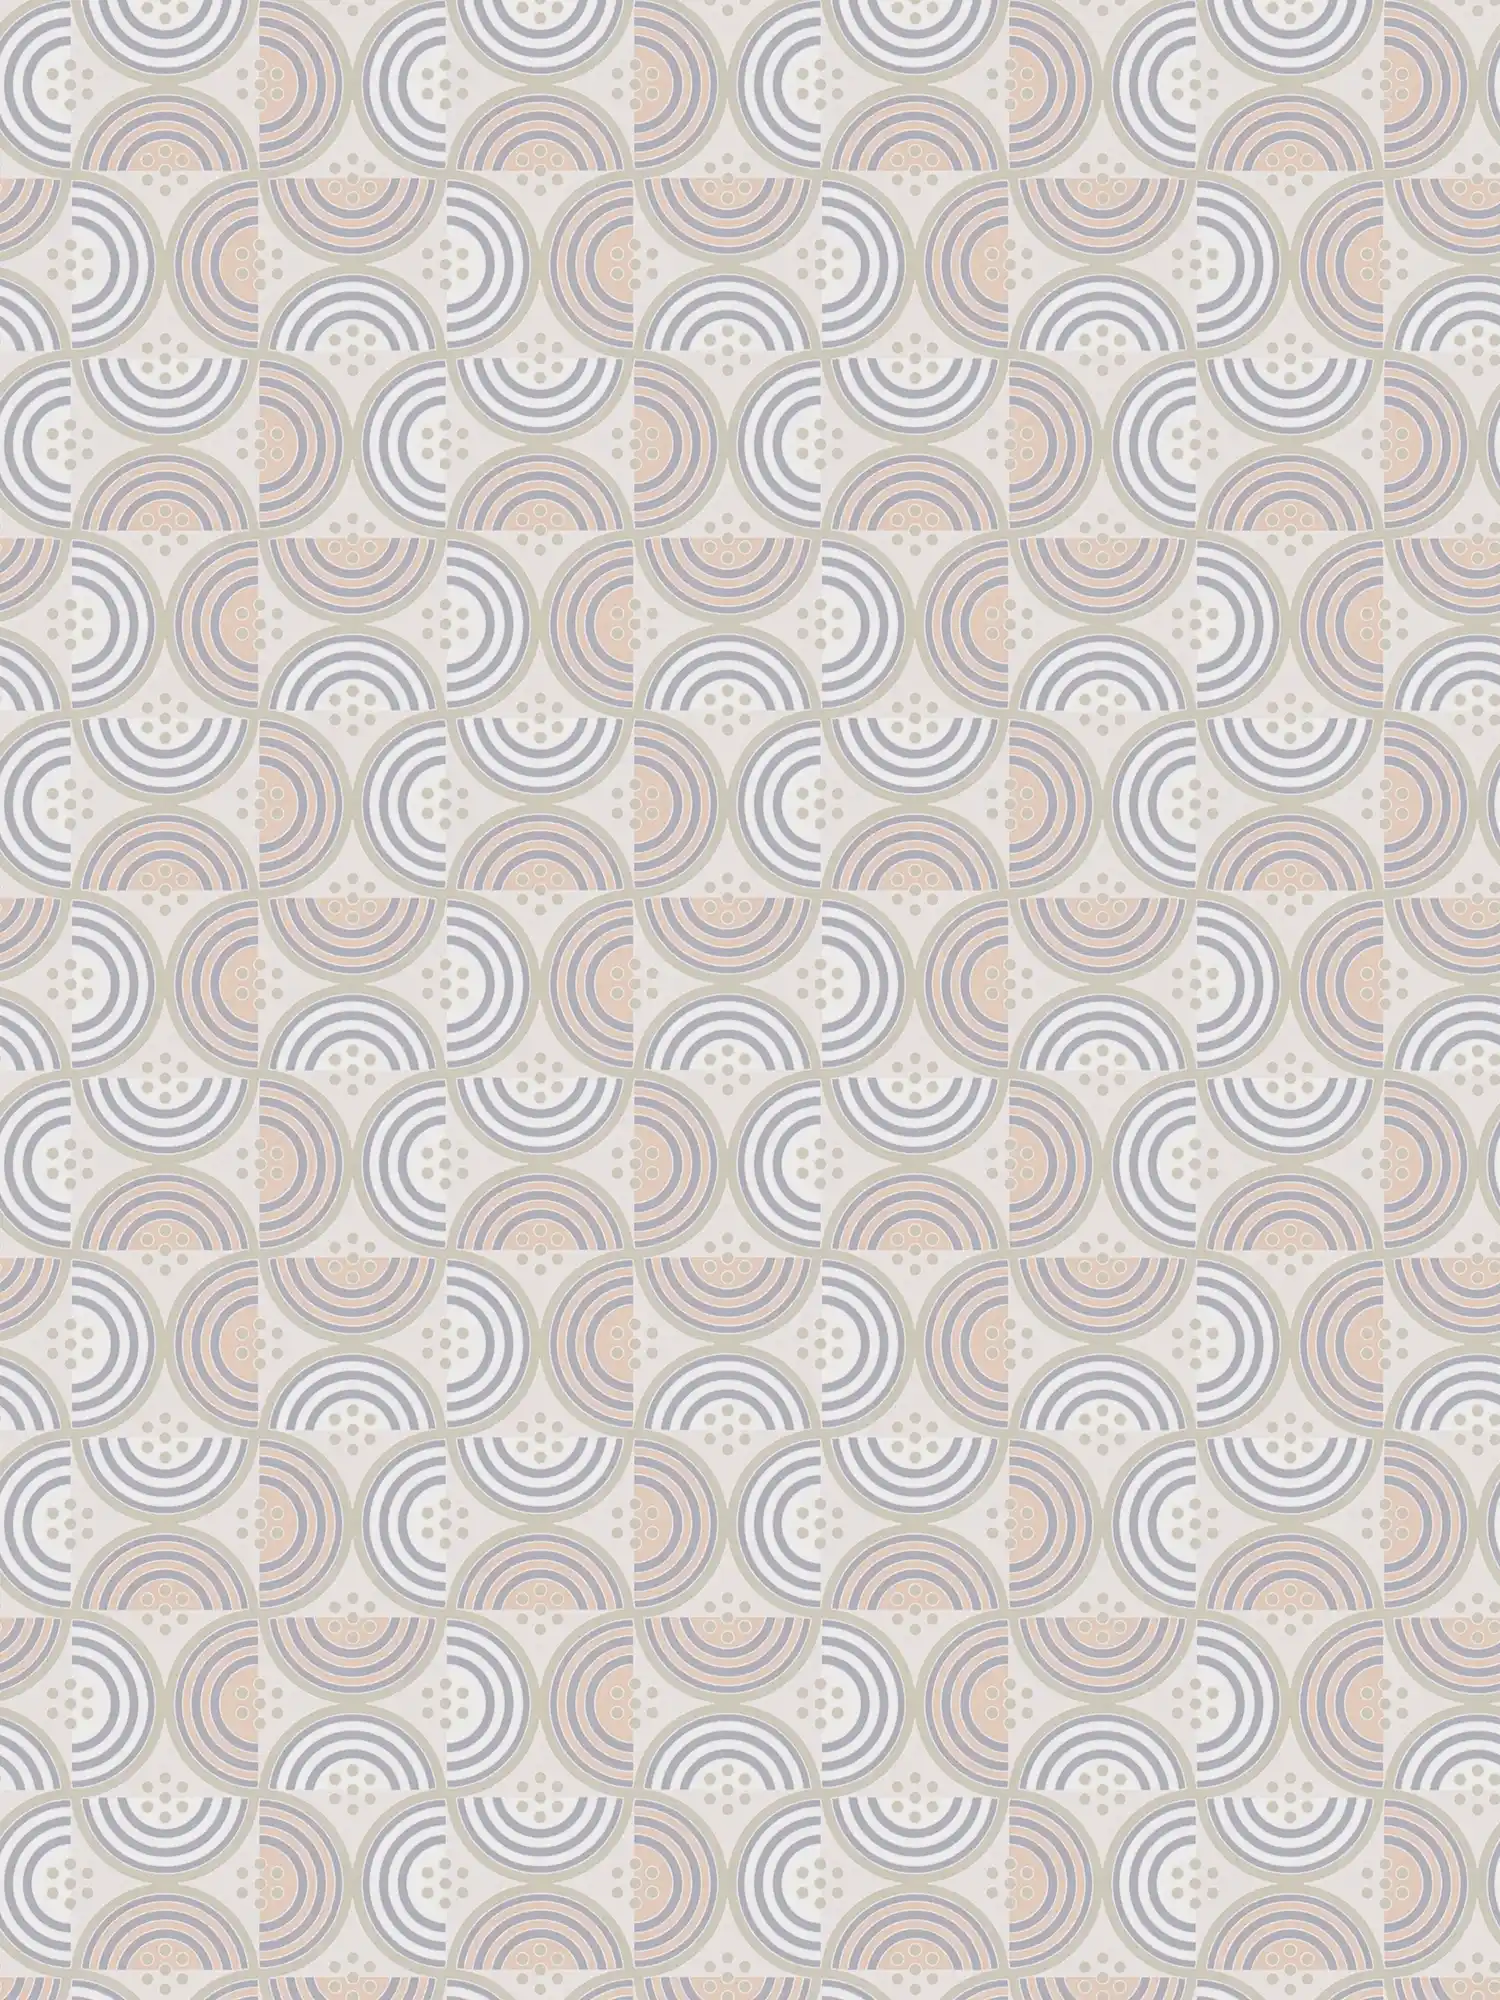 Non-woven wallpaper with geometric pattern in plain colours - orange, grey, beige
